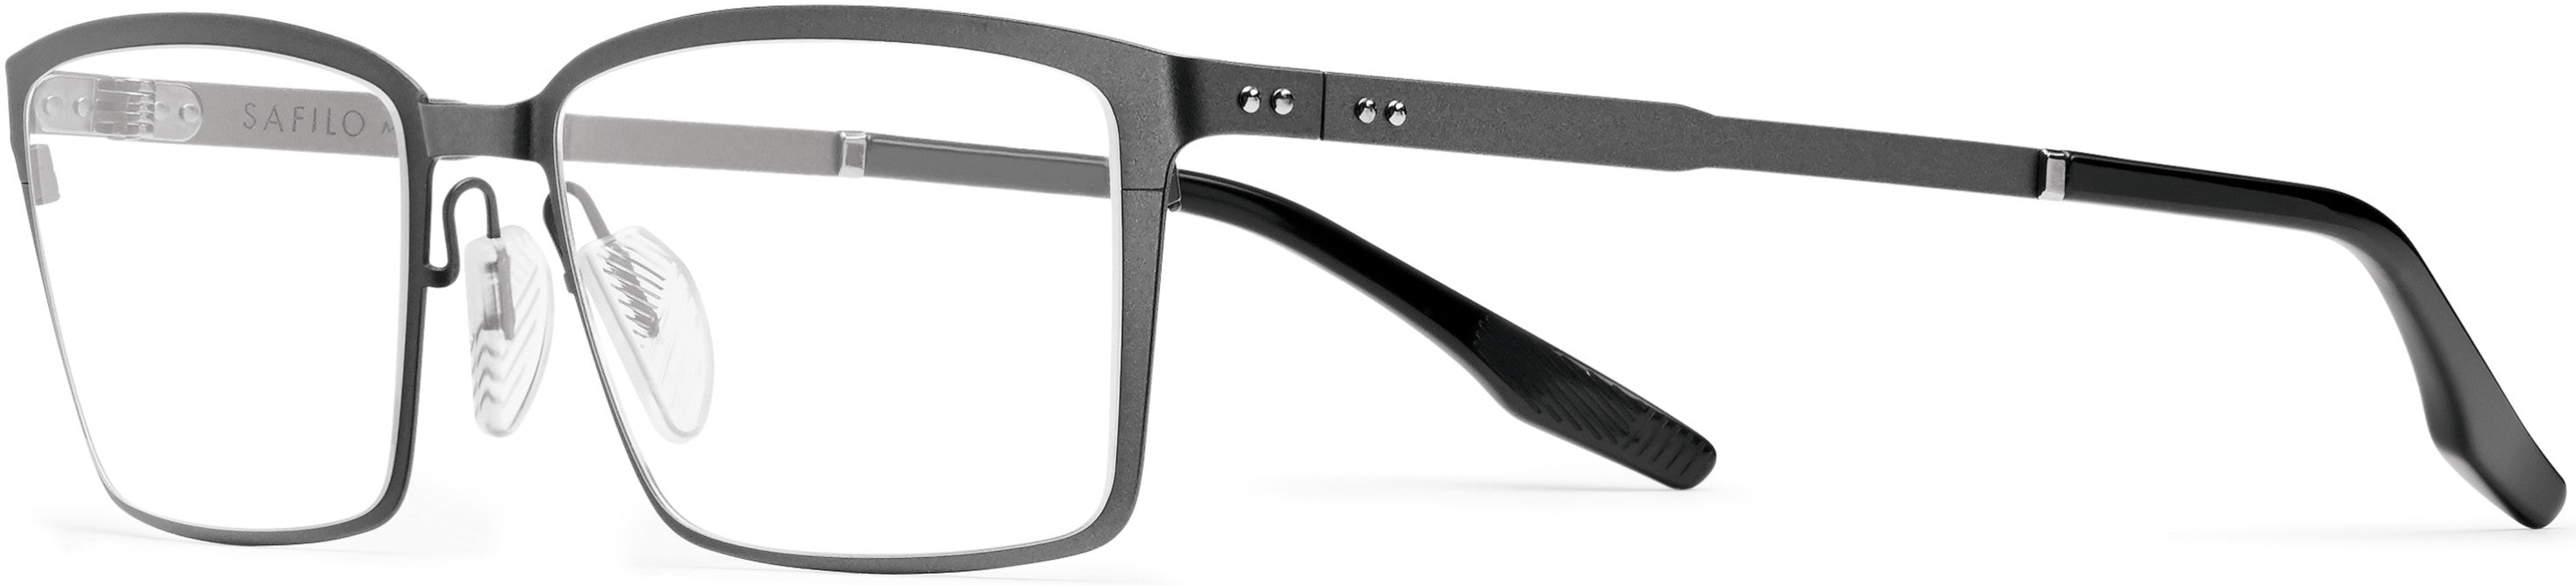 Safilo 2.0 Lamina 02 Rectangular Eyeglasses 0R80-0R80  Semi Matte Dark Ruthenium (00 Demo Lens)